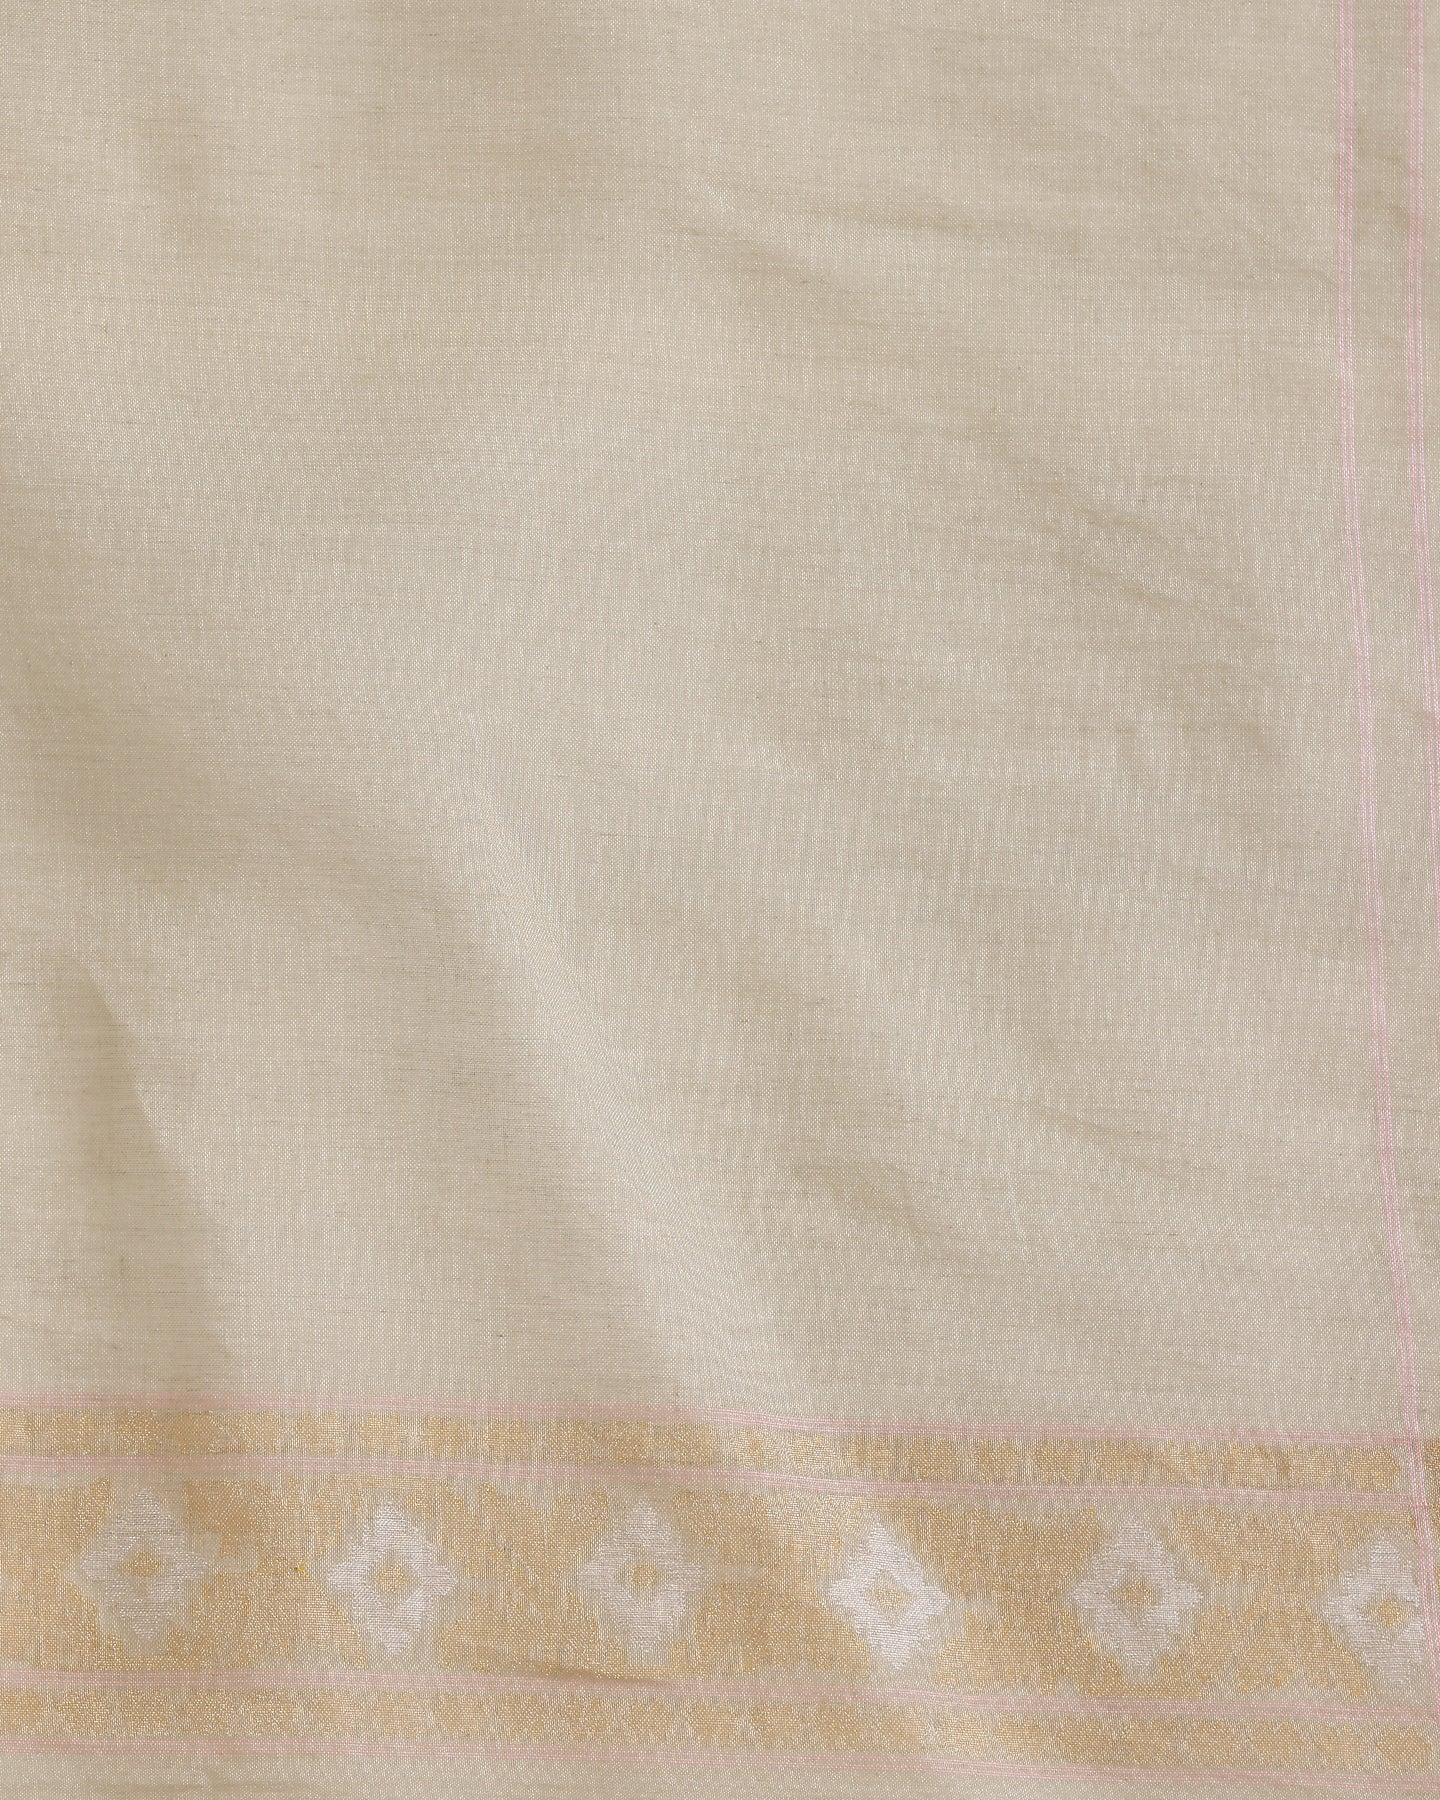 Handloom Cotton Woven Saree